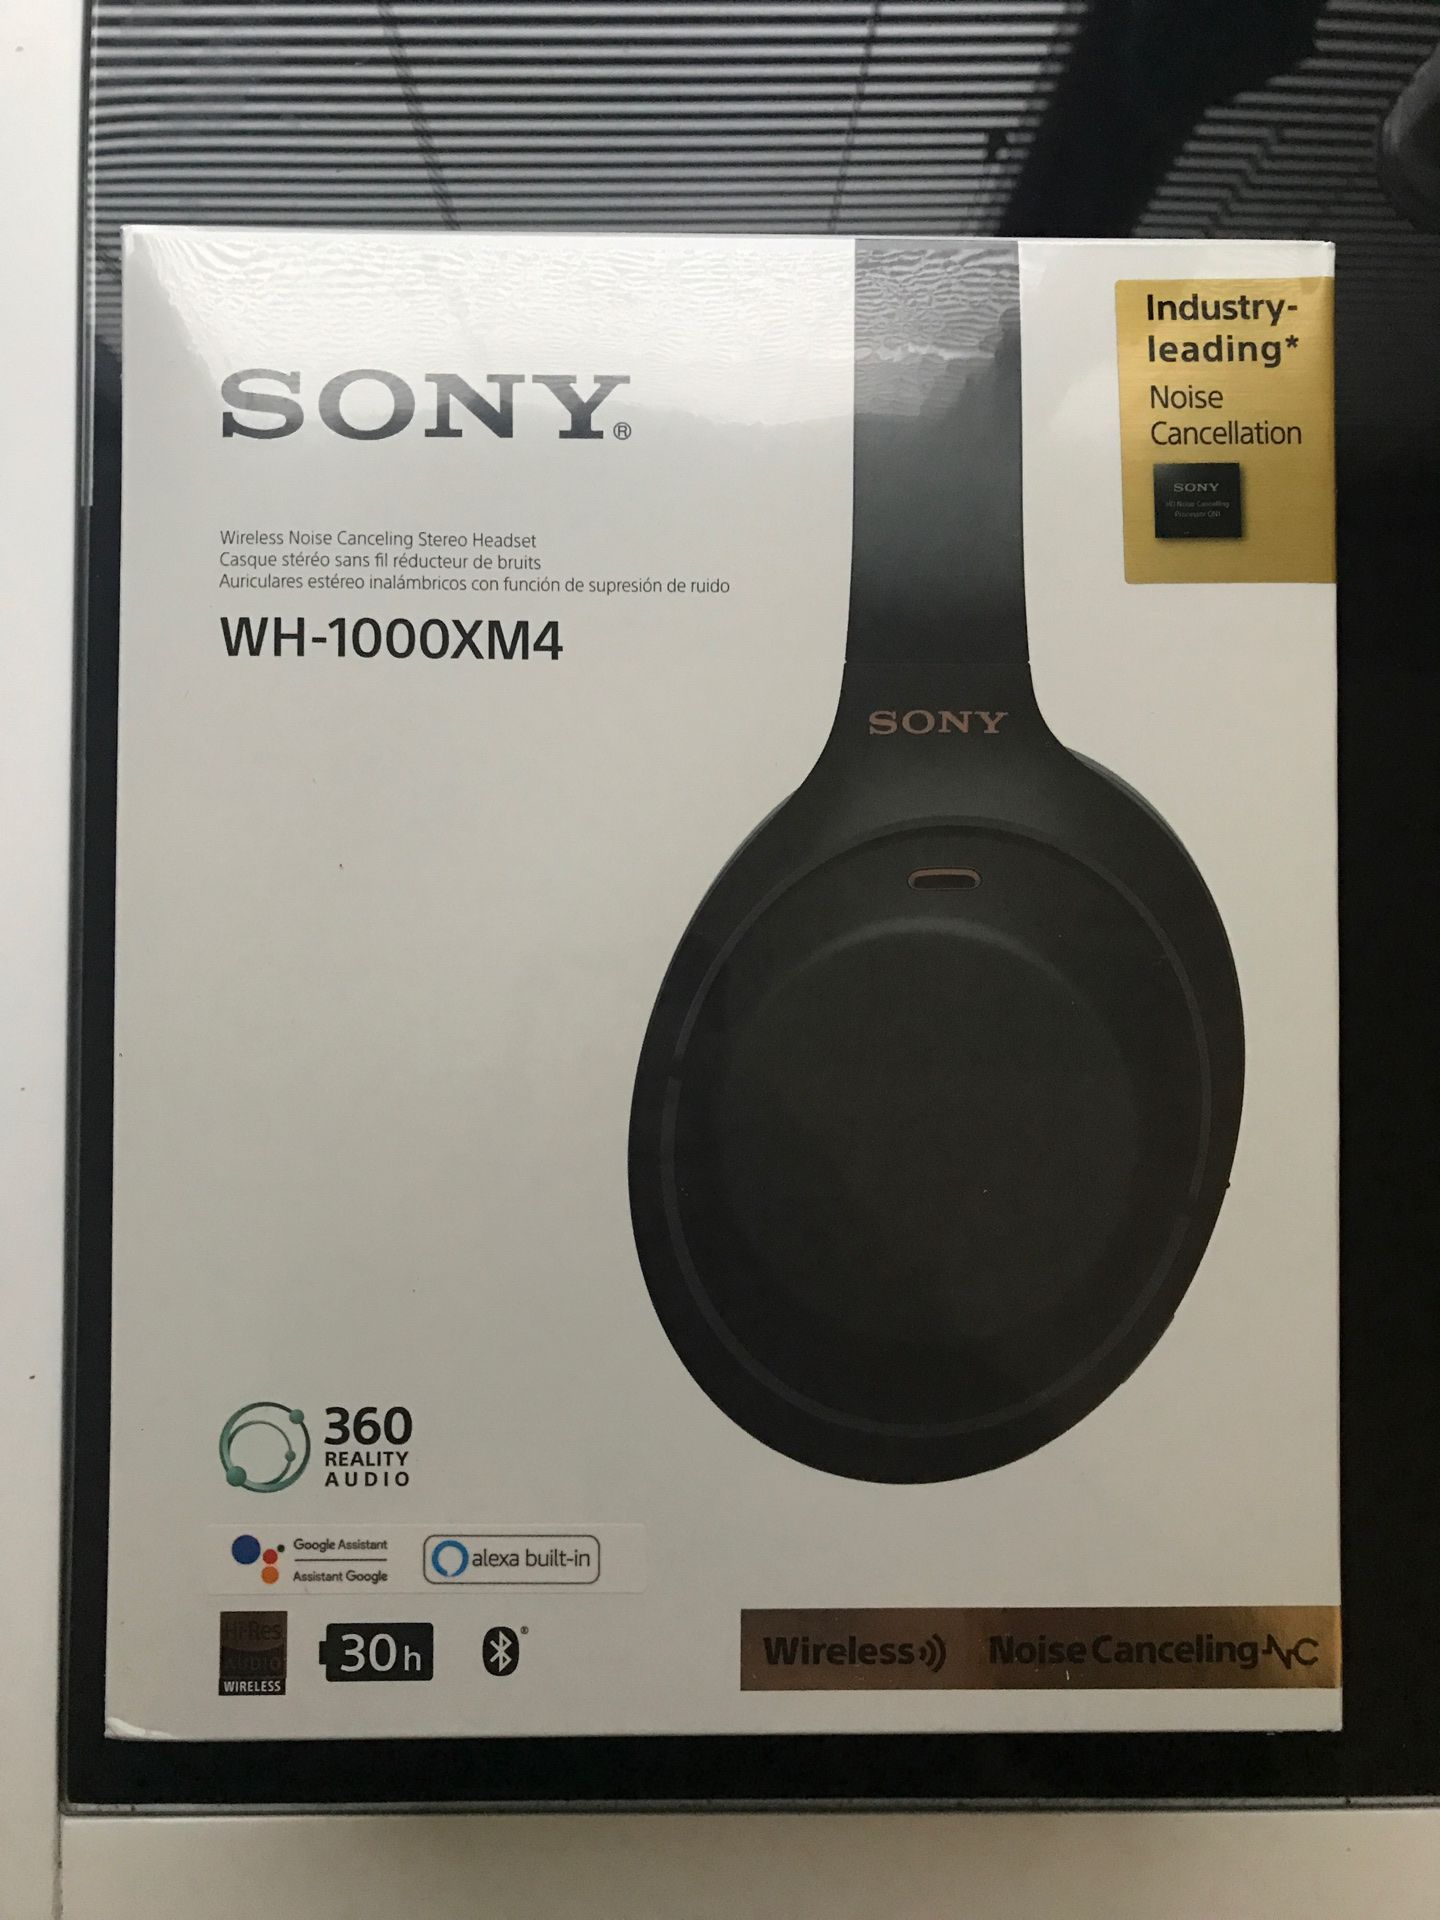 Sony WH-1000XM4 Noise-cancelling Headphones